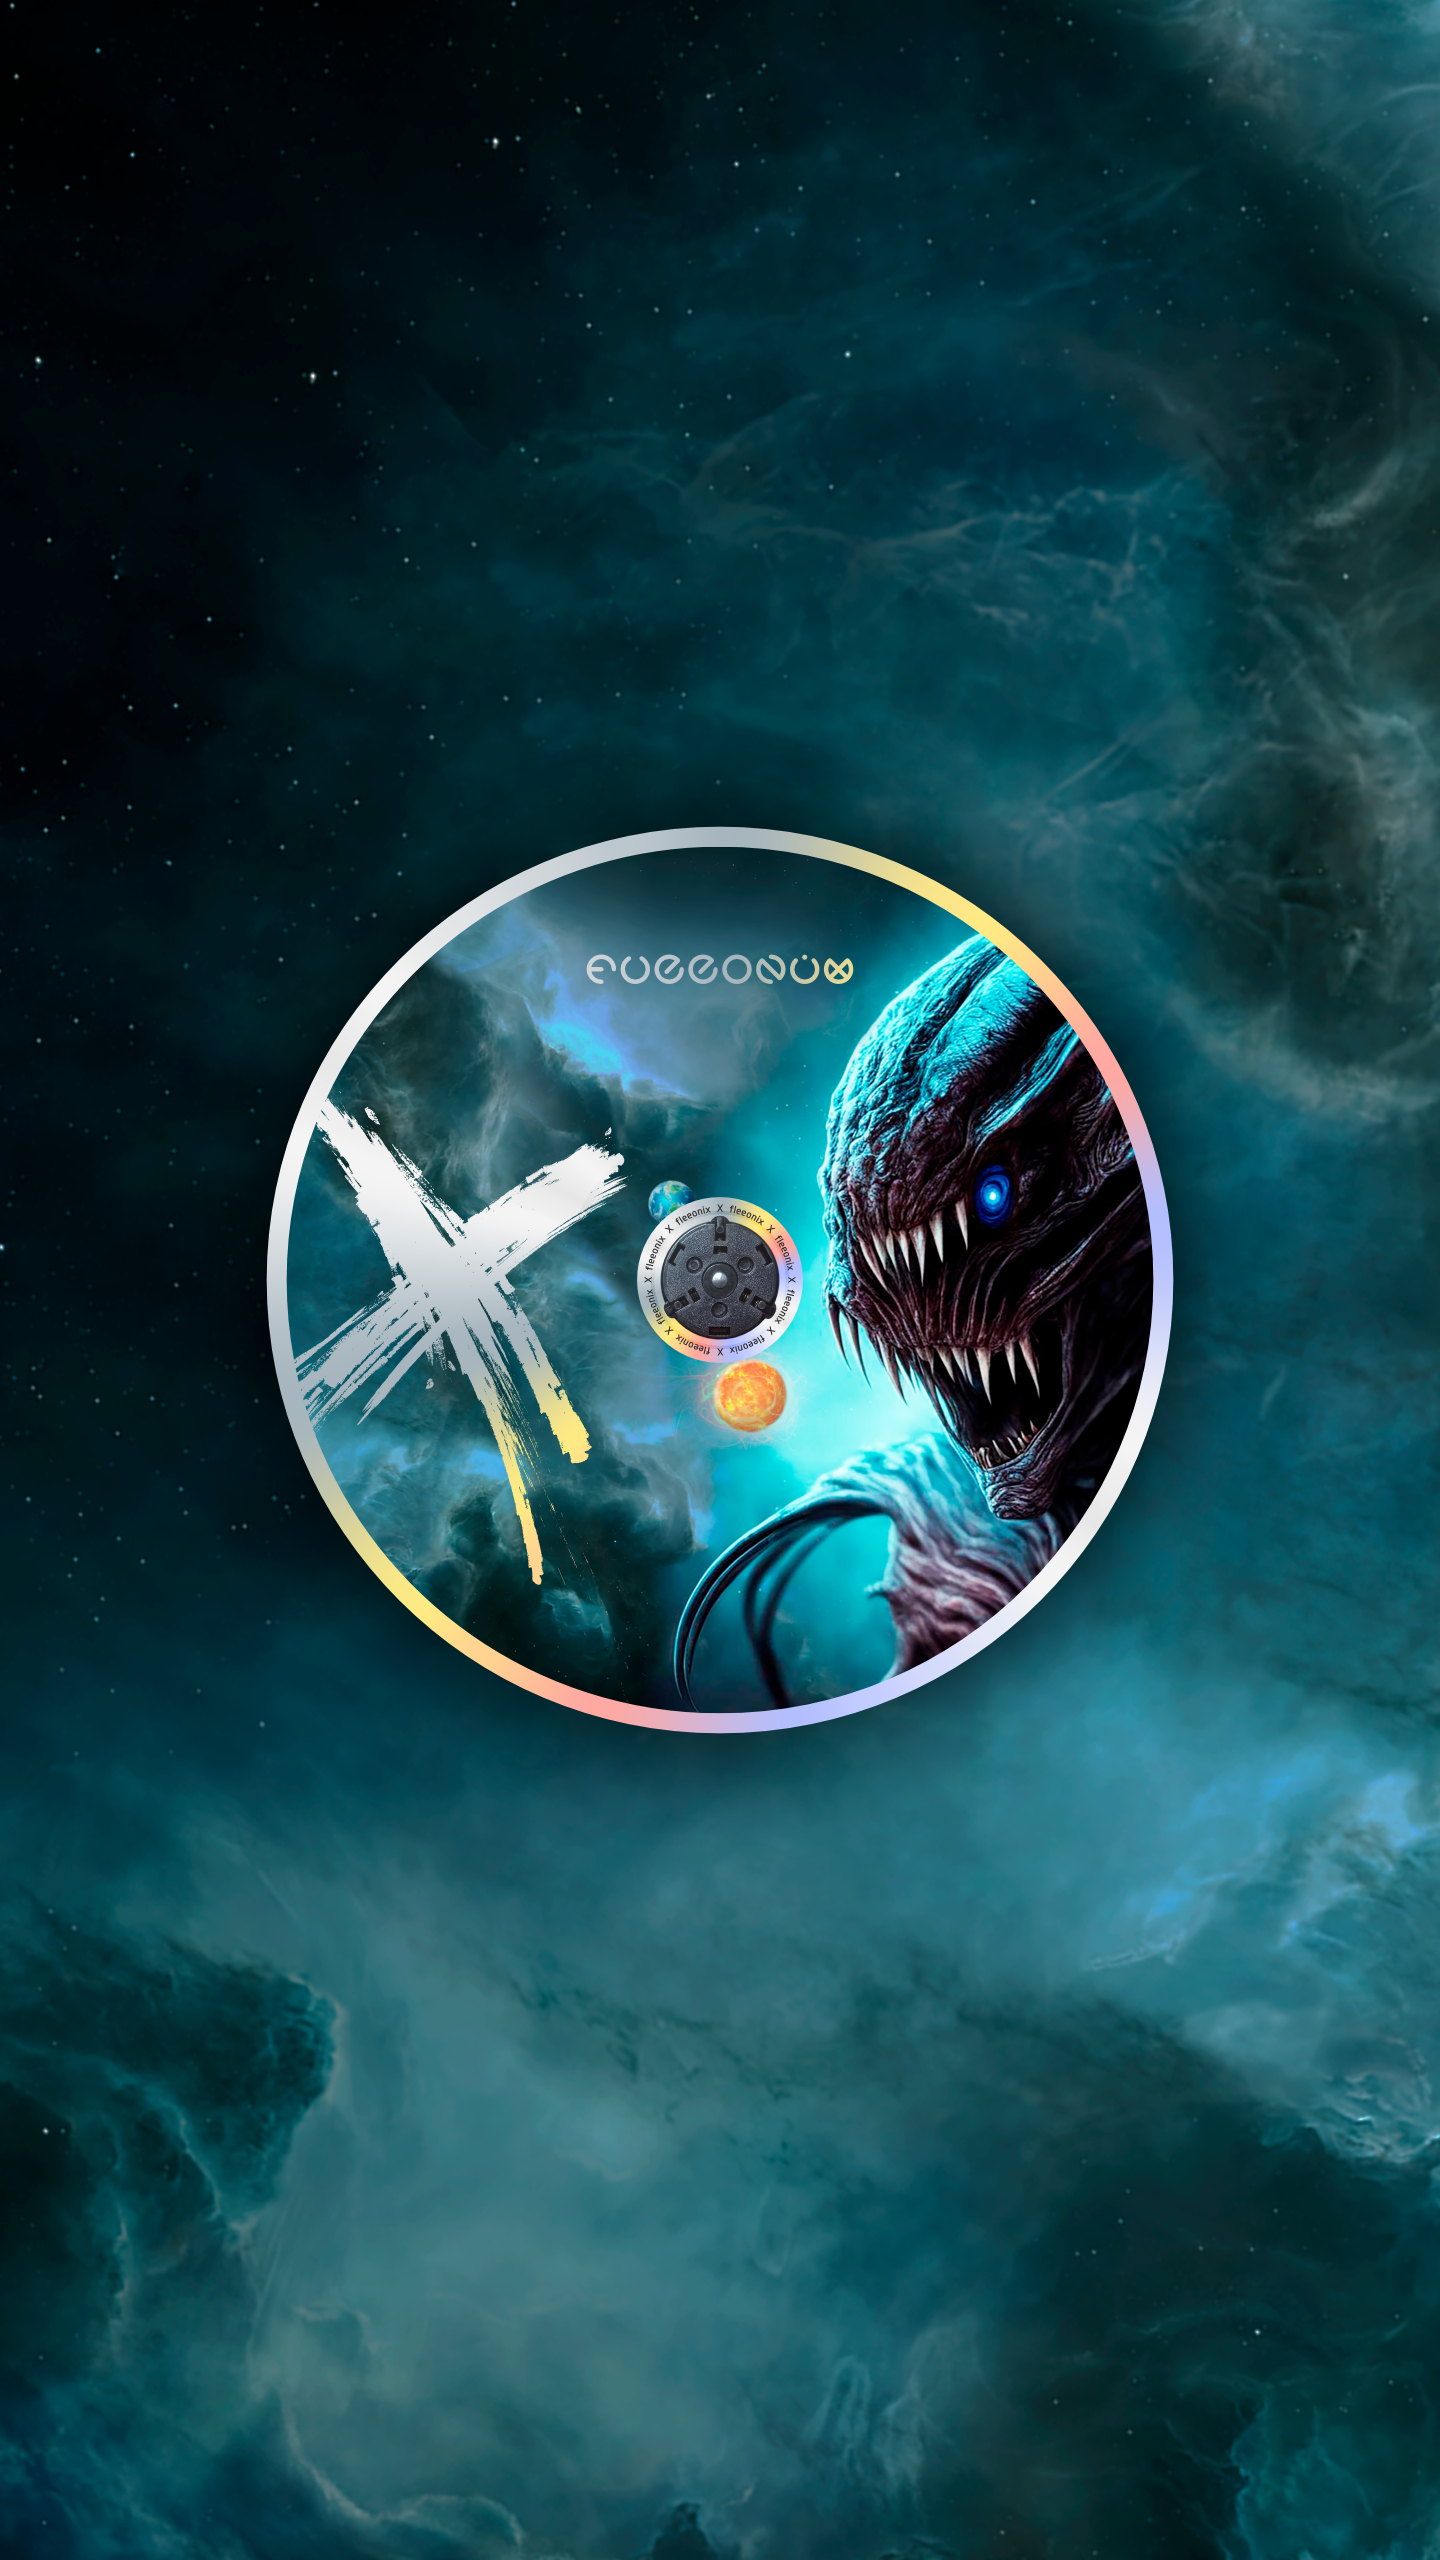 fleeonix - X 😈 (house, drum, bass, beat, electro music)